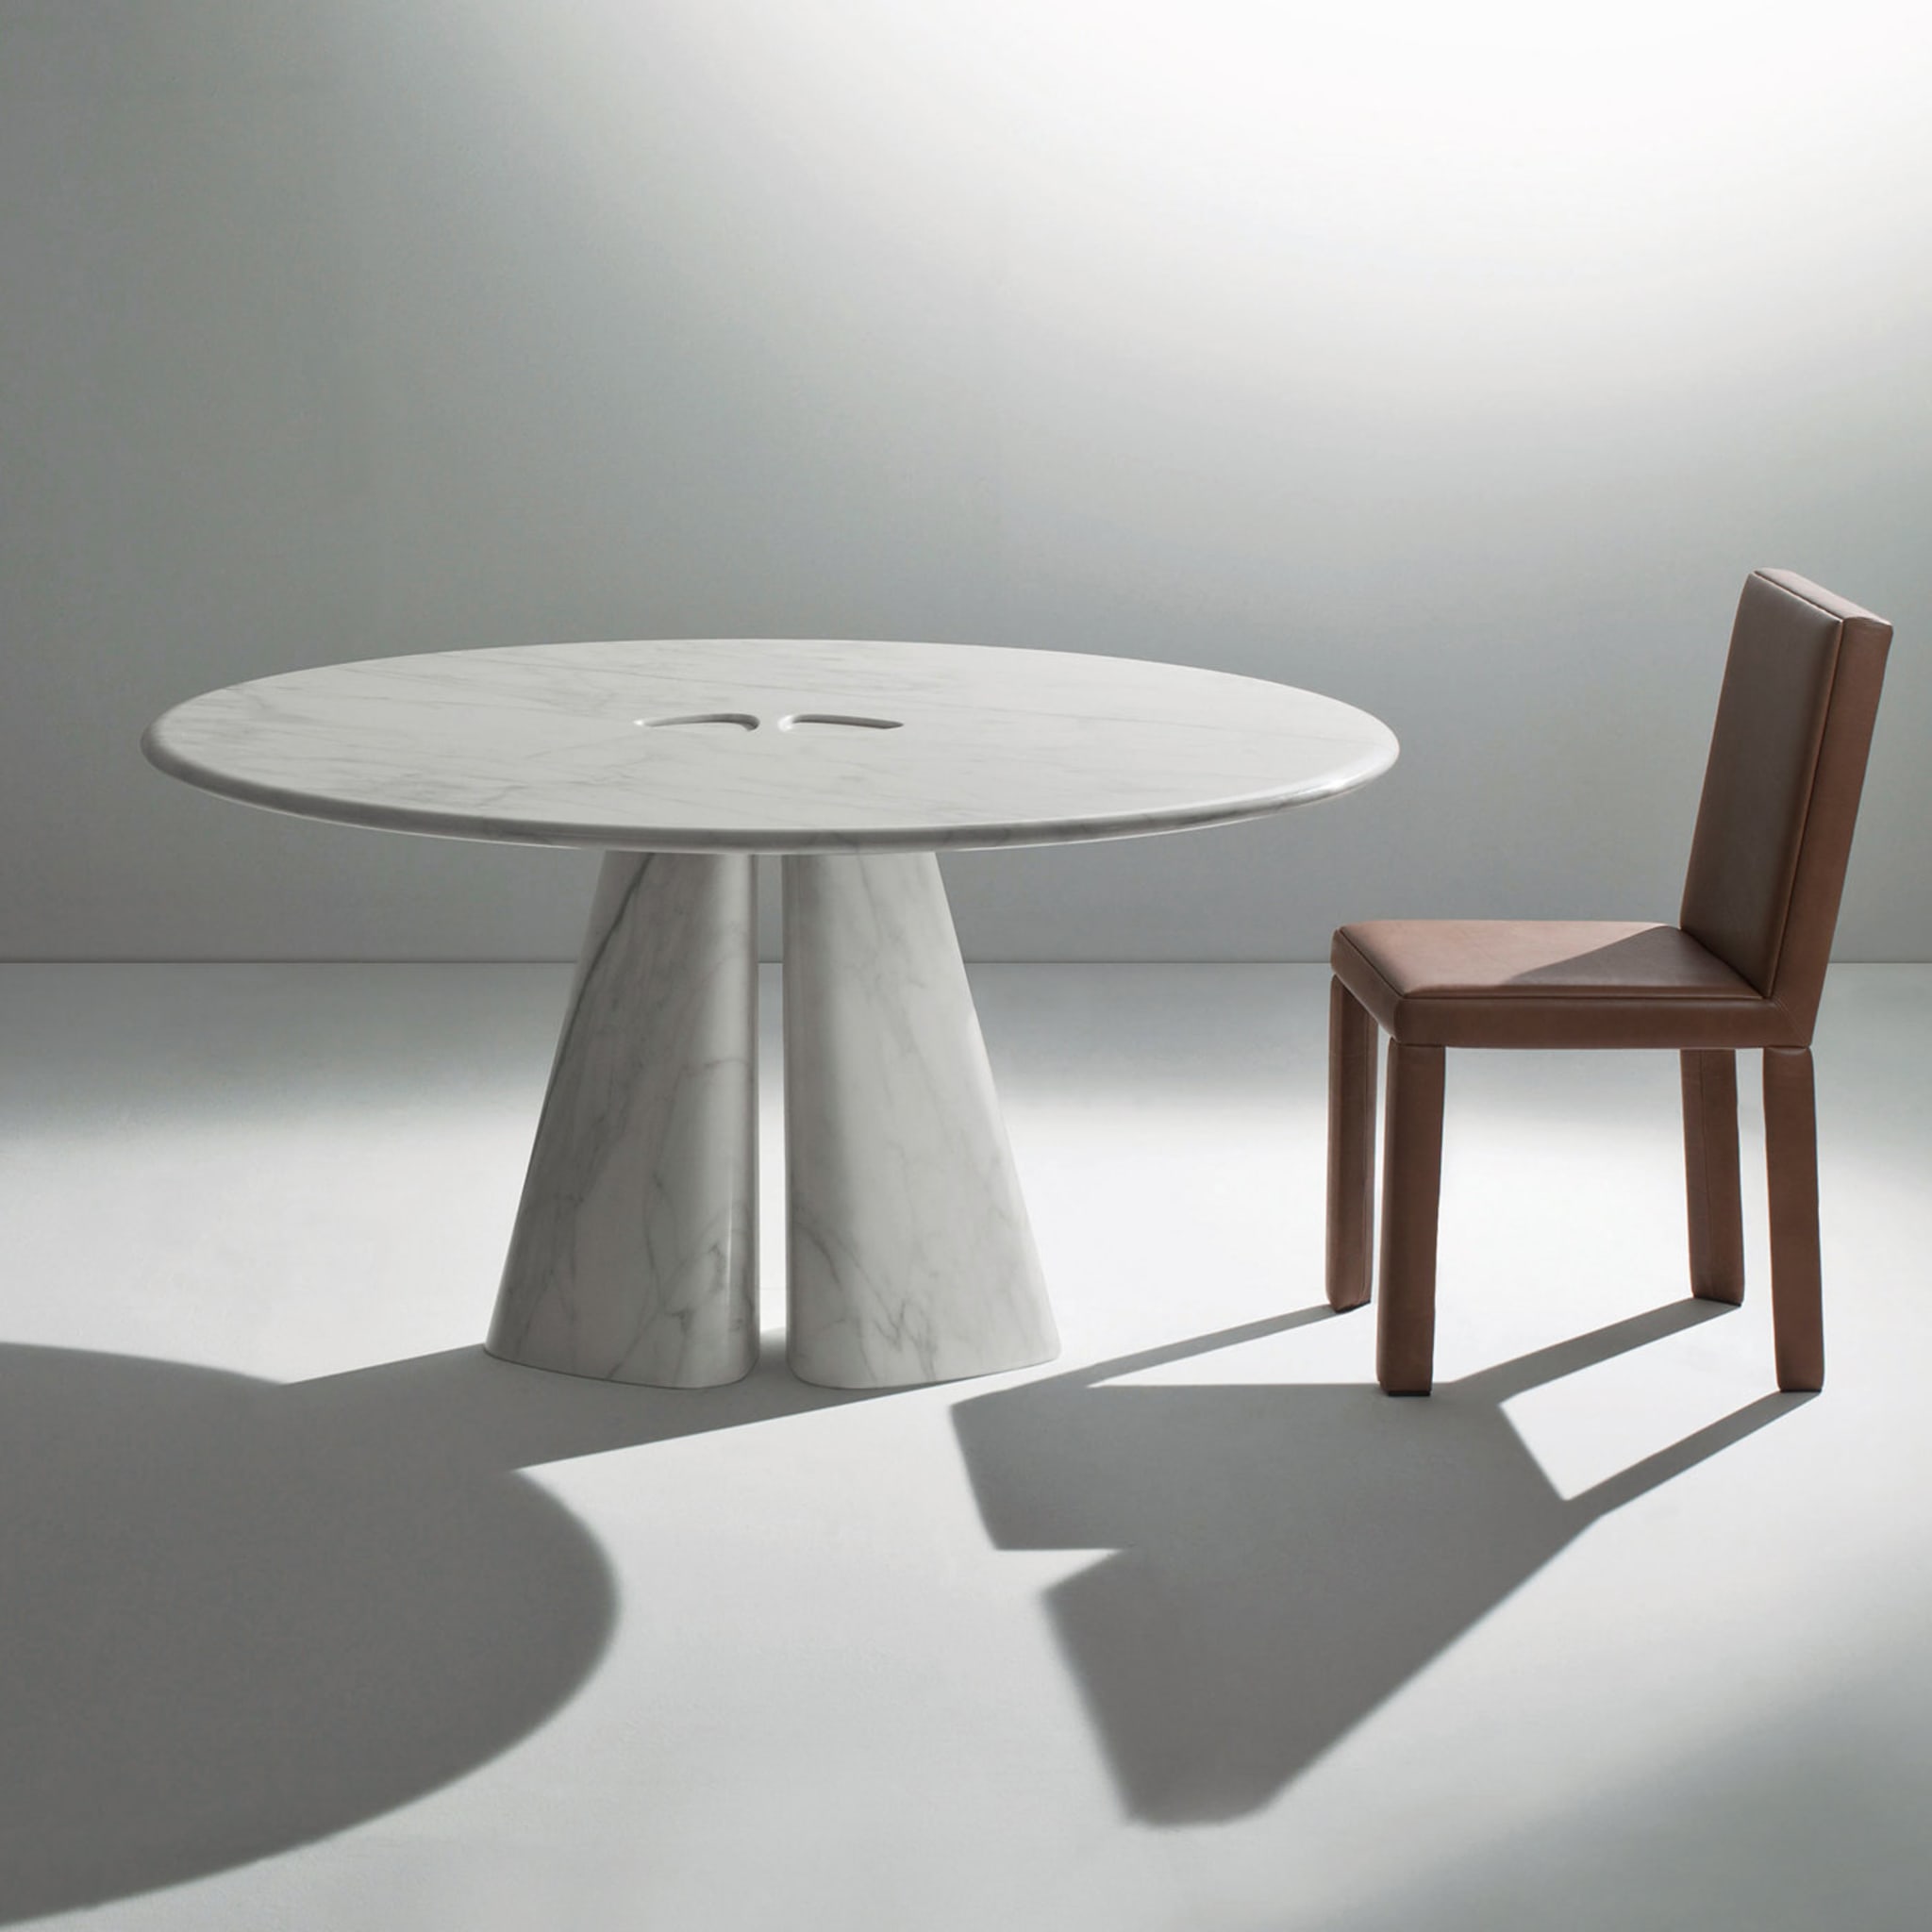 Raja Round Table by Bartoli Design - Alternative view 3